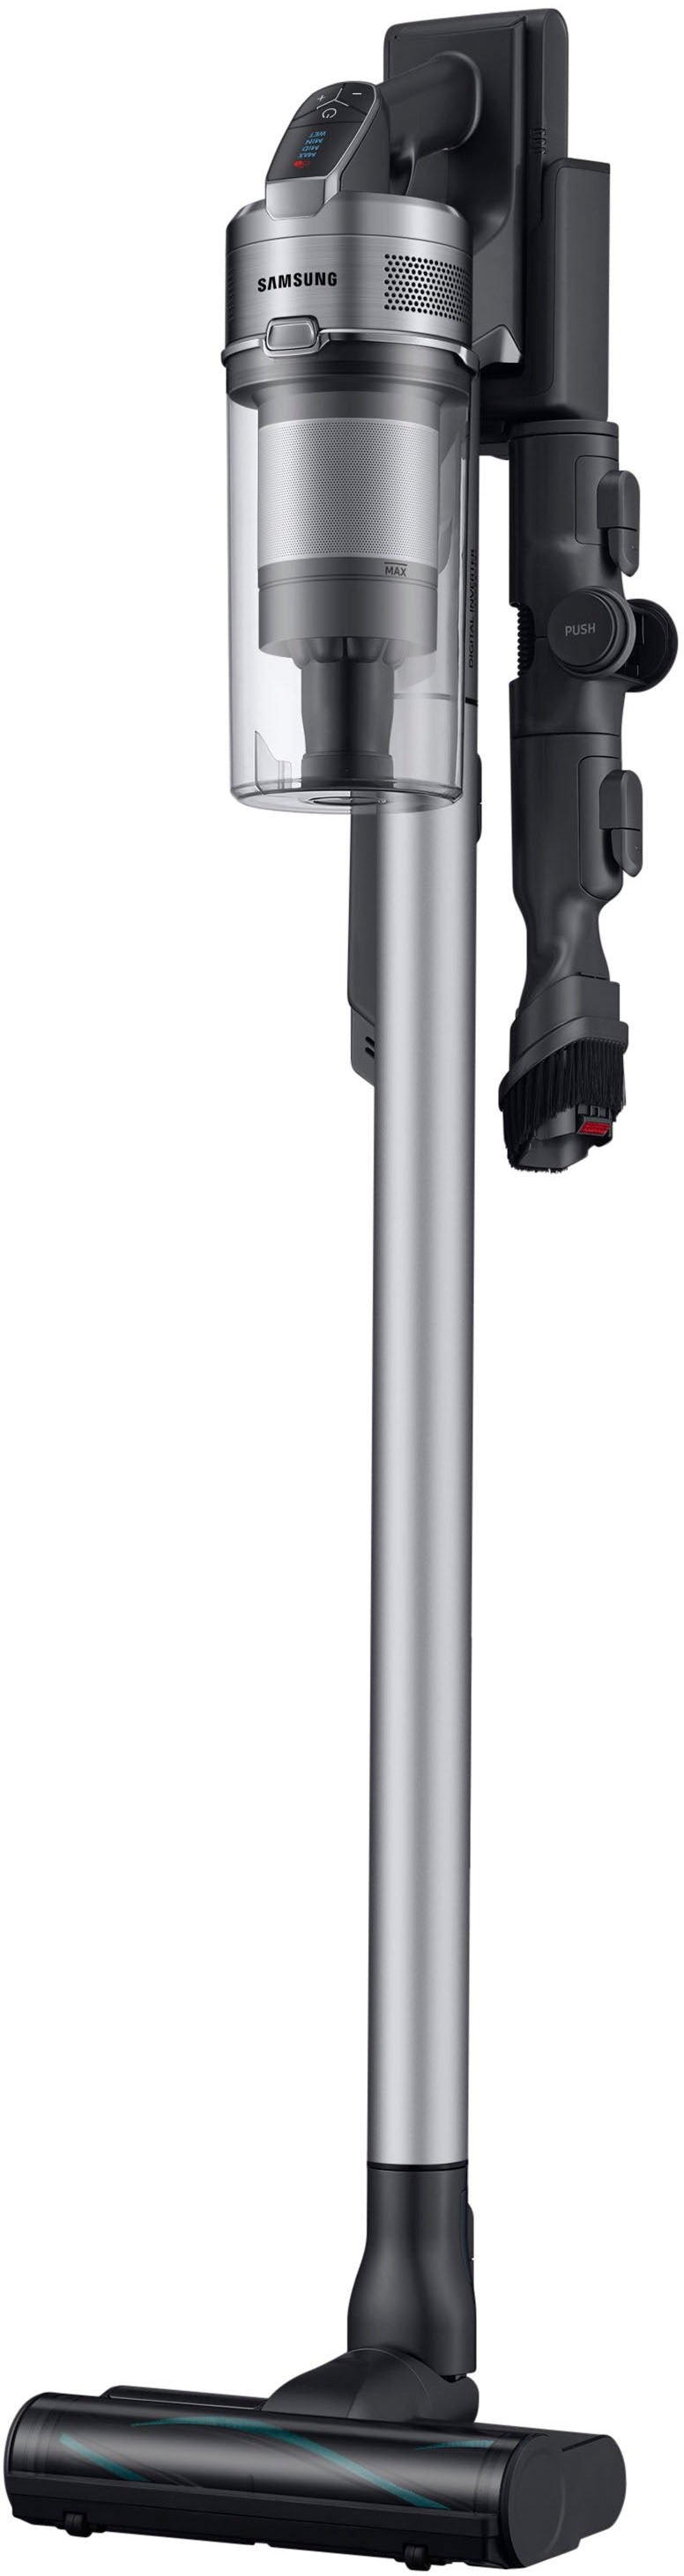 Samsung - Jet™ 75+ Cordless Stick Vacuum with Additional Battery - Titan ChroMetal_0